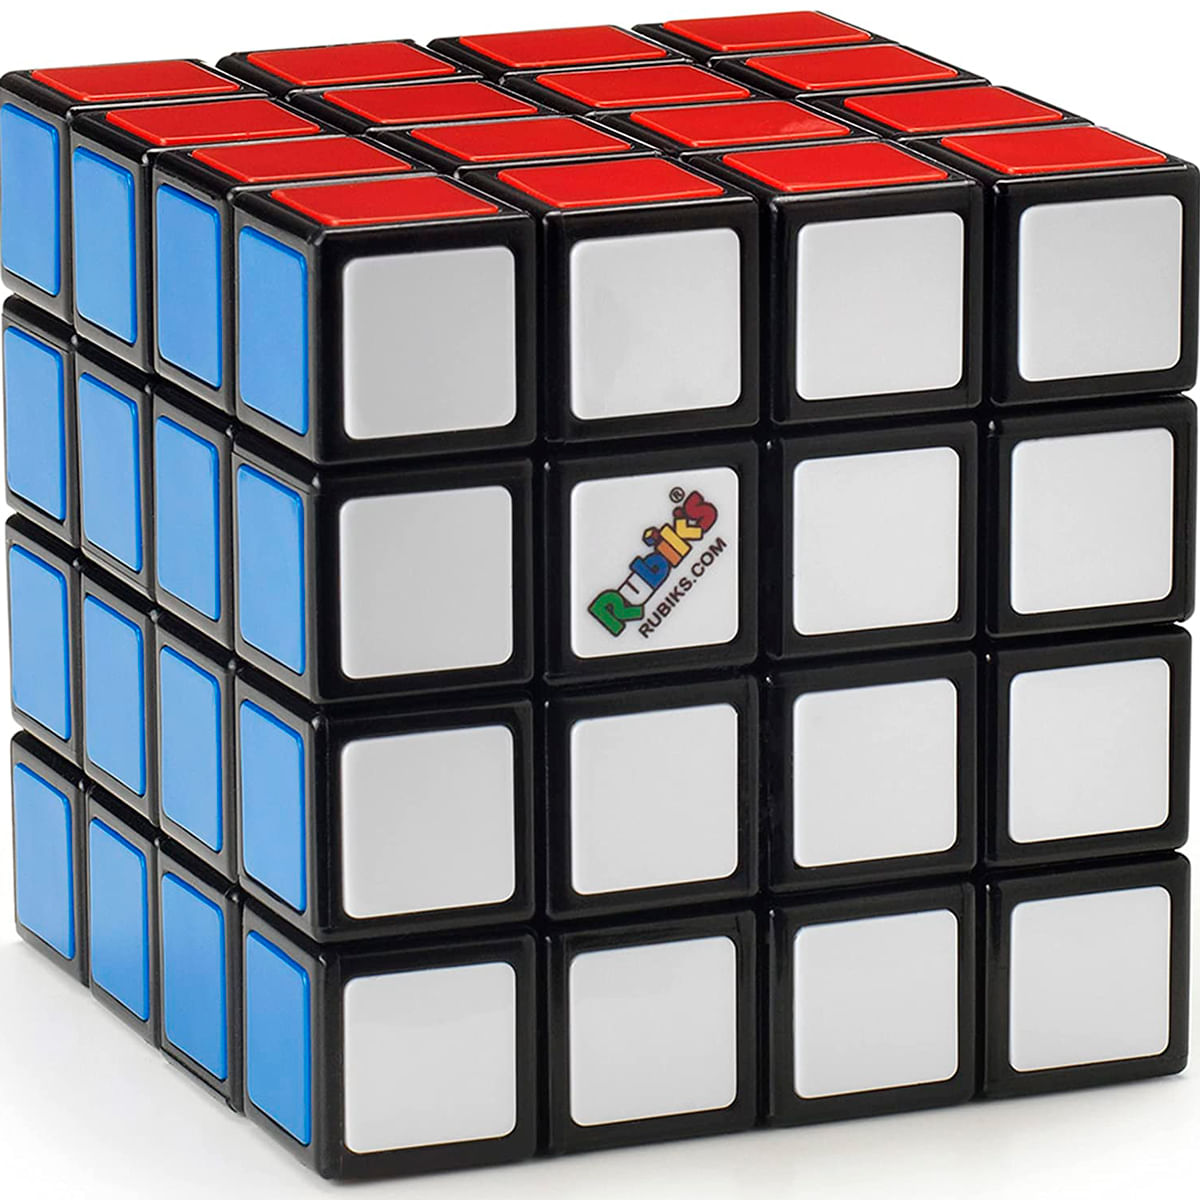 Cubo De Rubik 4x4 Rubik's Master Cubo 4x4